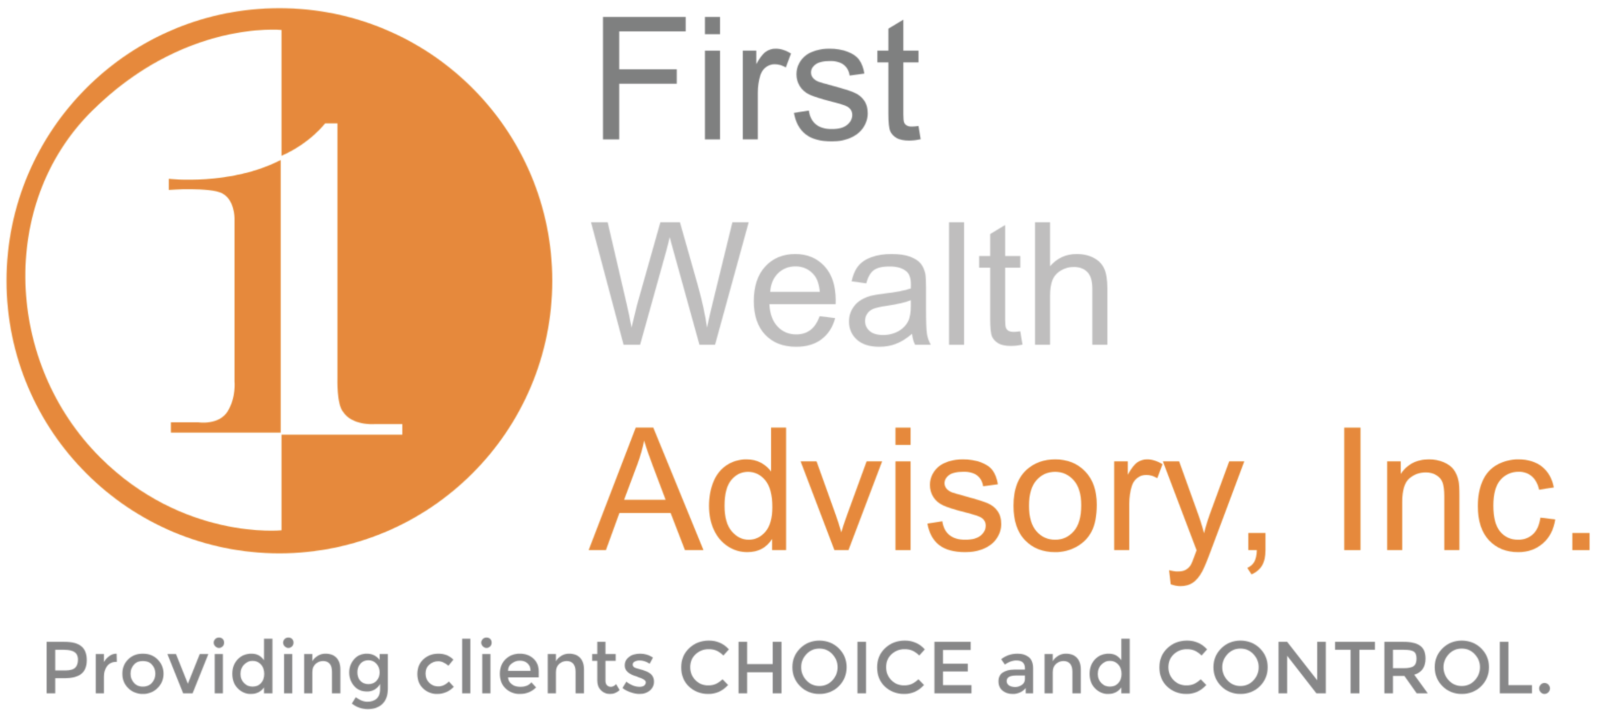 First Wealth Advisory, Inc